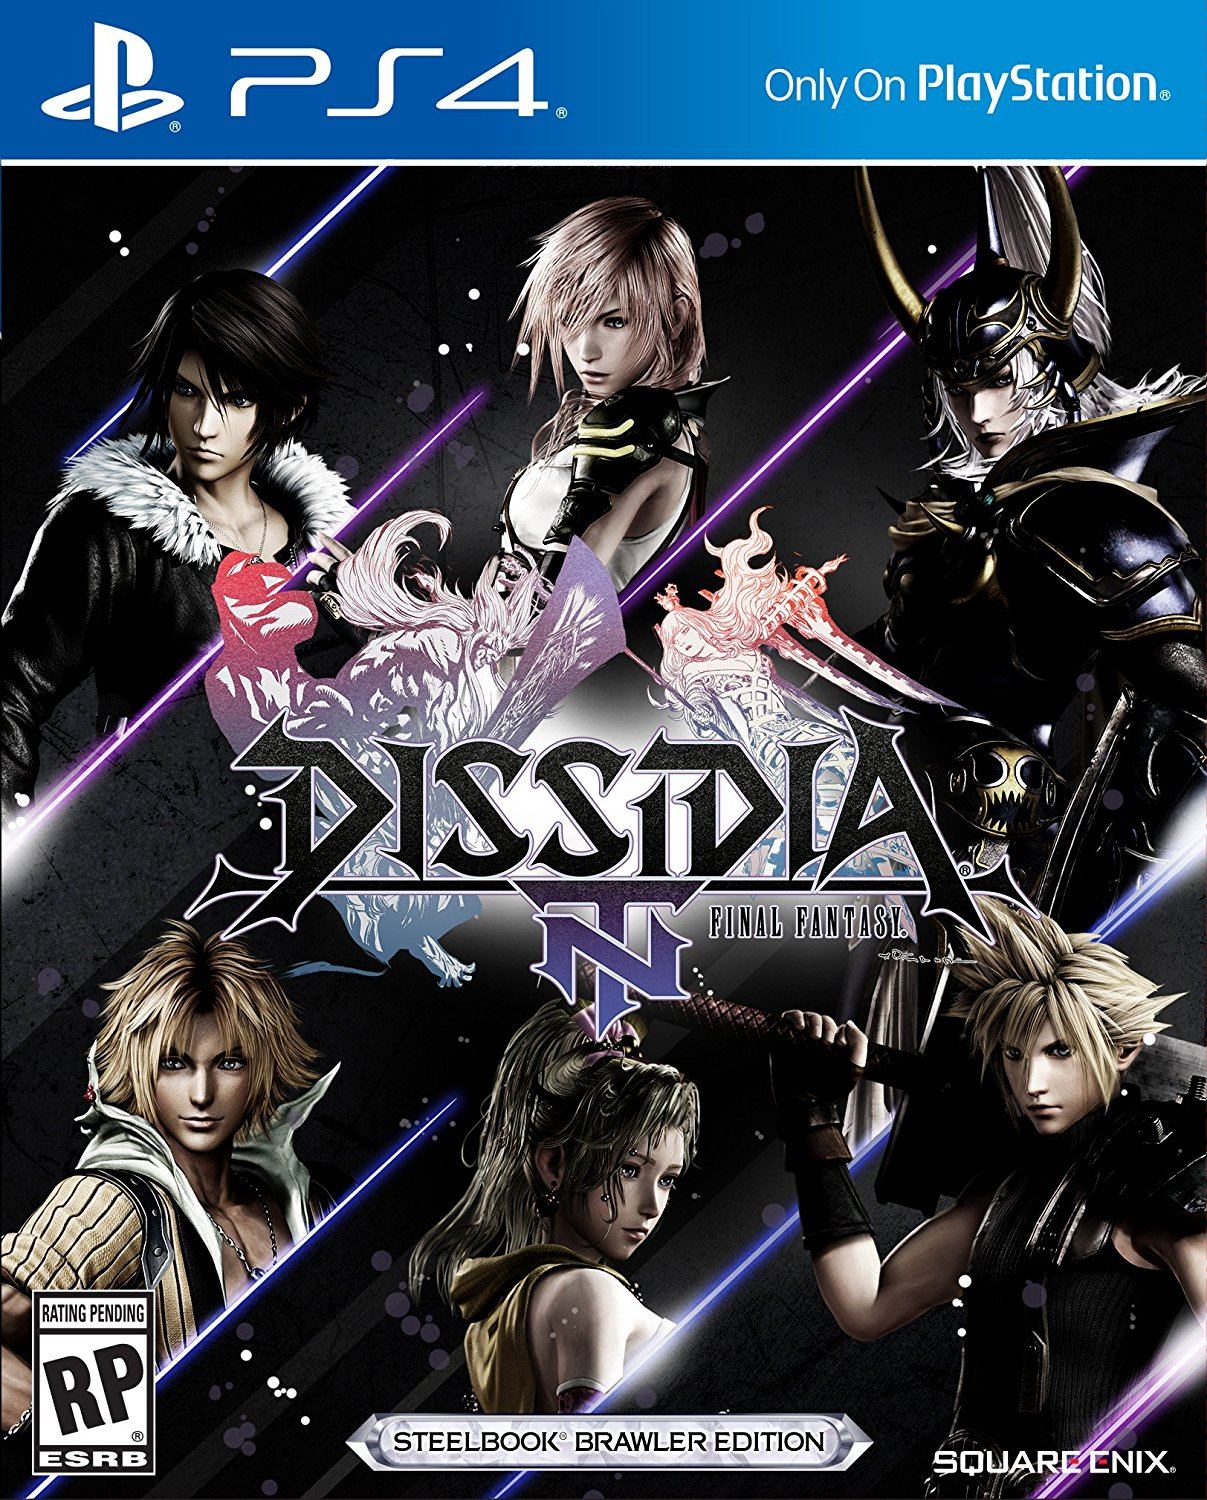 dissidia-final-fantasy-nt-steelbook-brawler-edition-534177.1.jpg